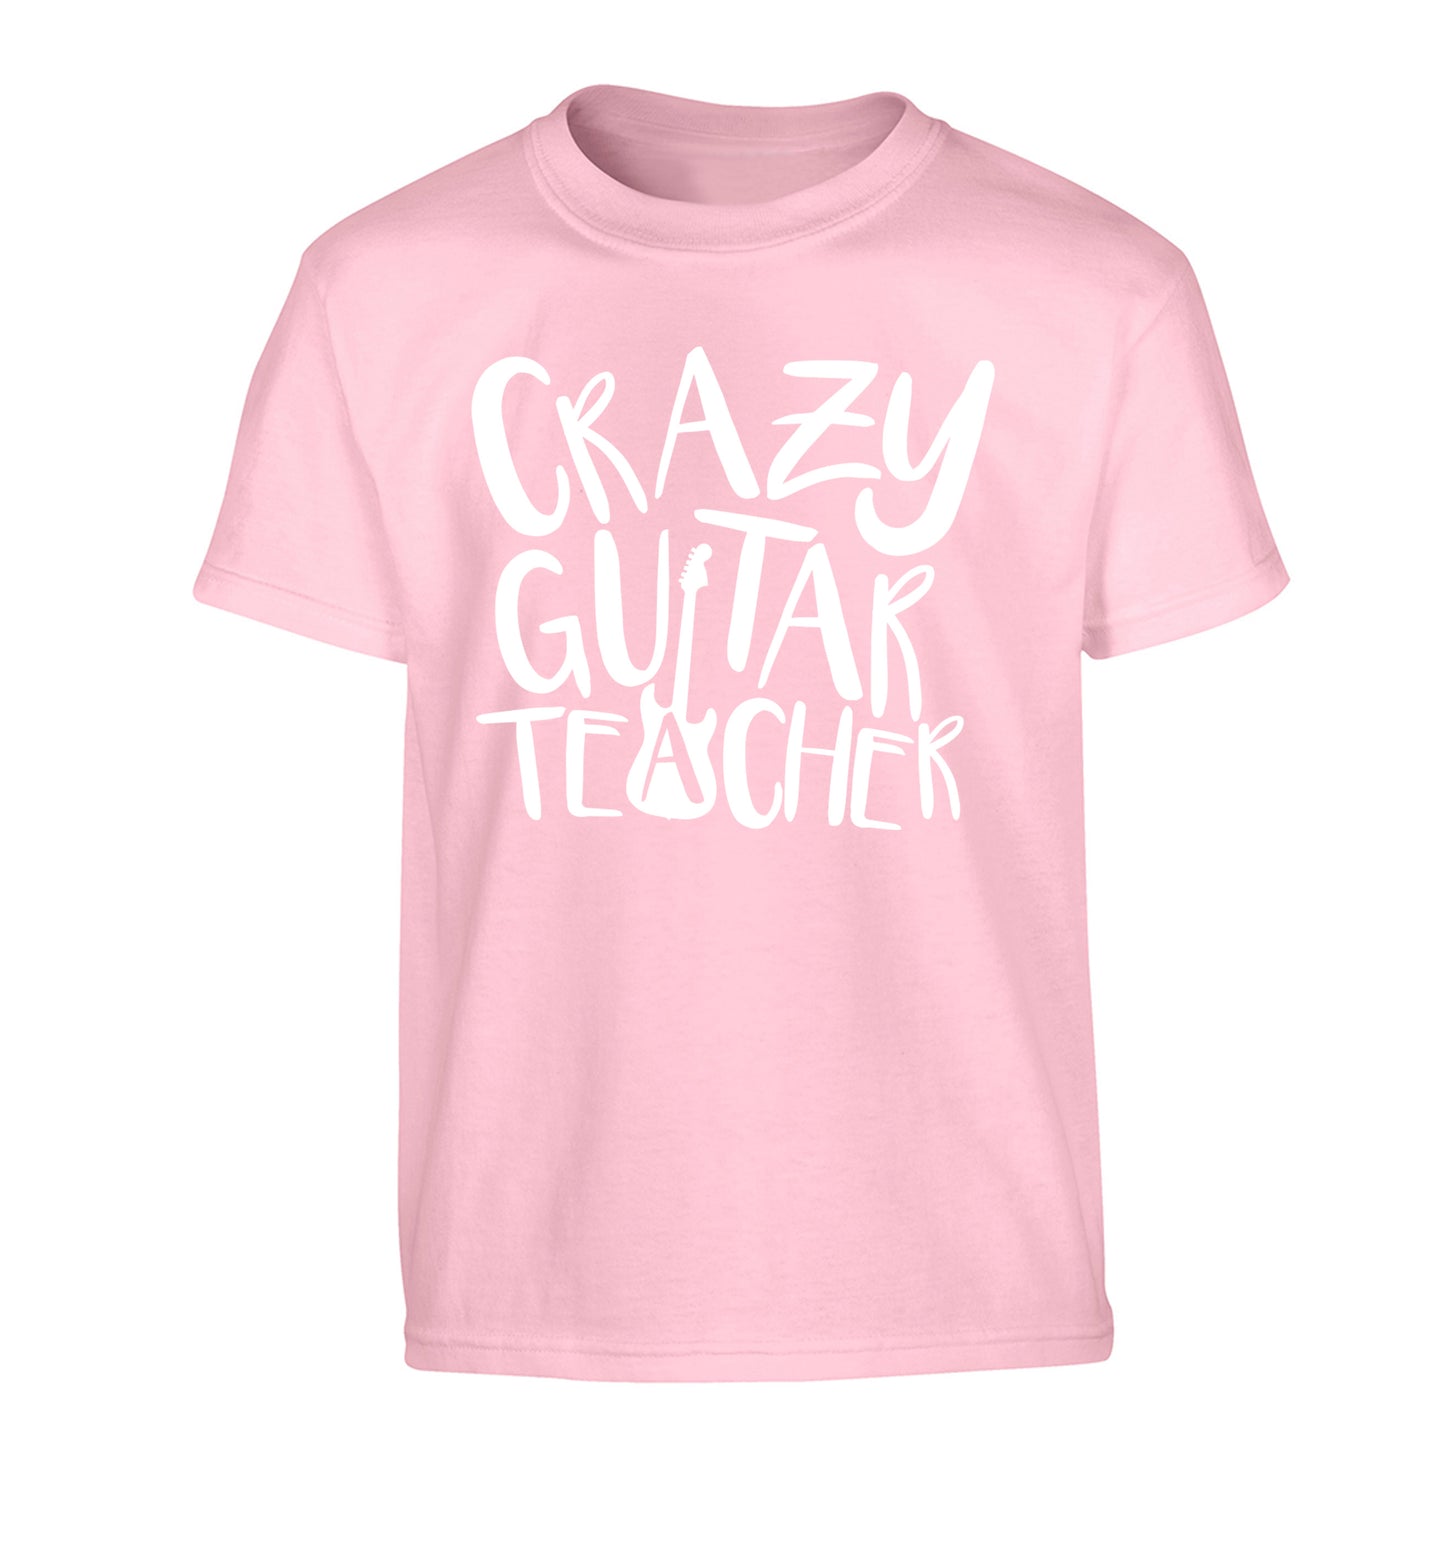 Crazy guitar teacher Children's light pink Tshirt 12-13 Years